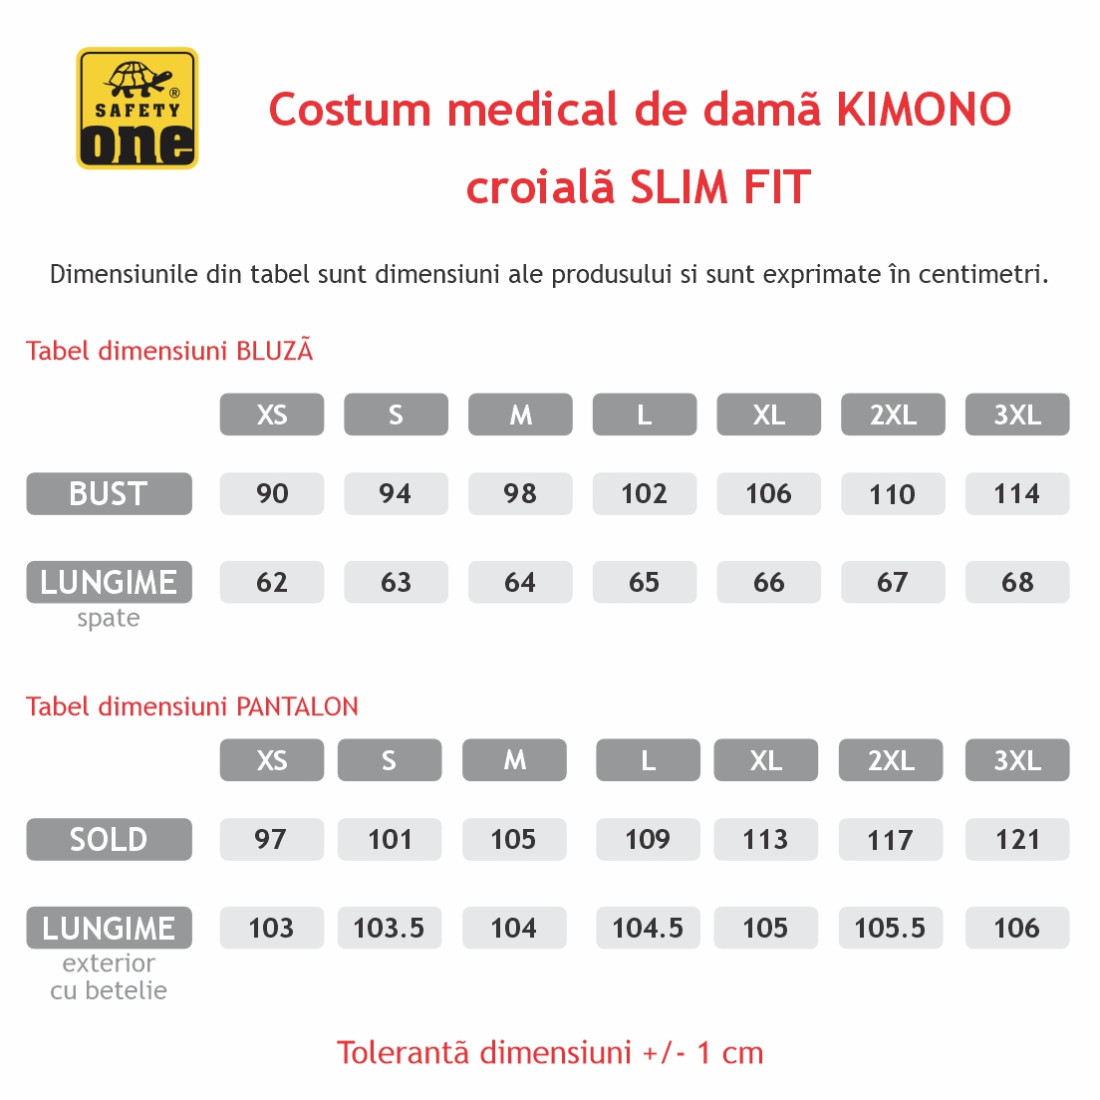 Costum medical dama KIMONO - Productie proprie